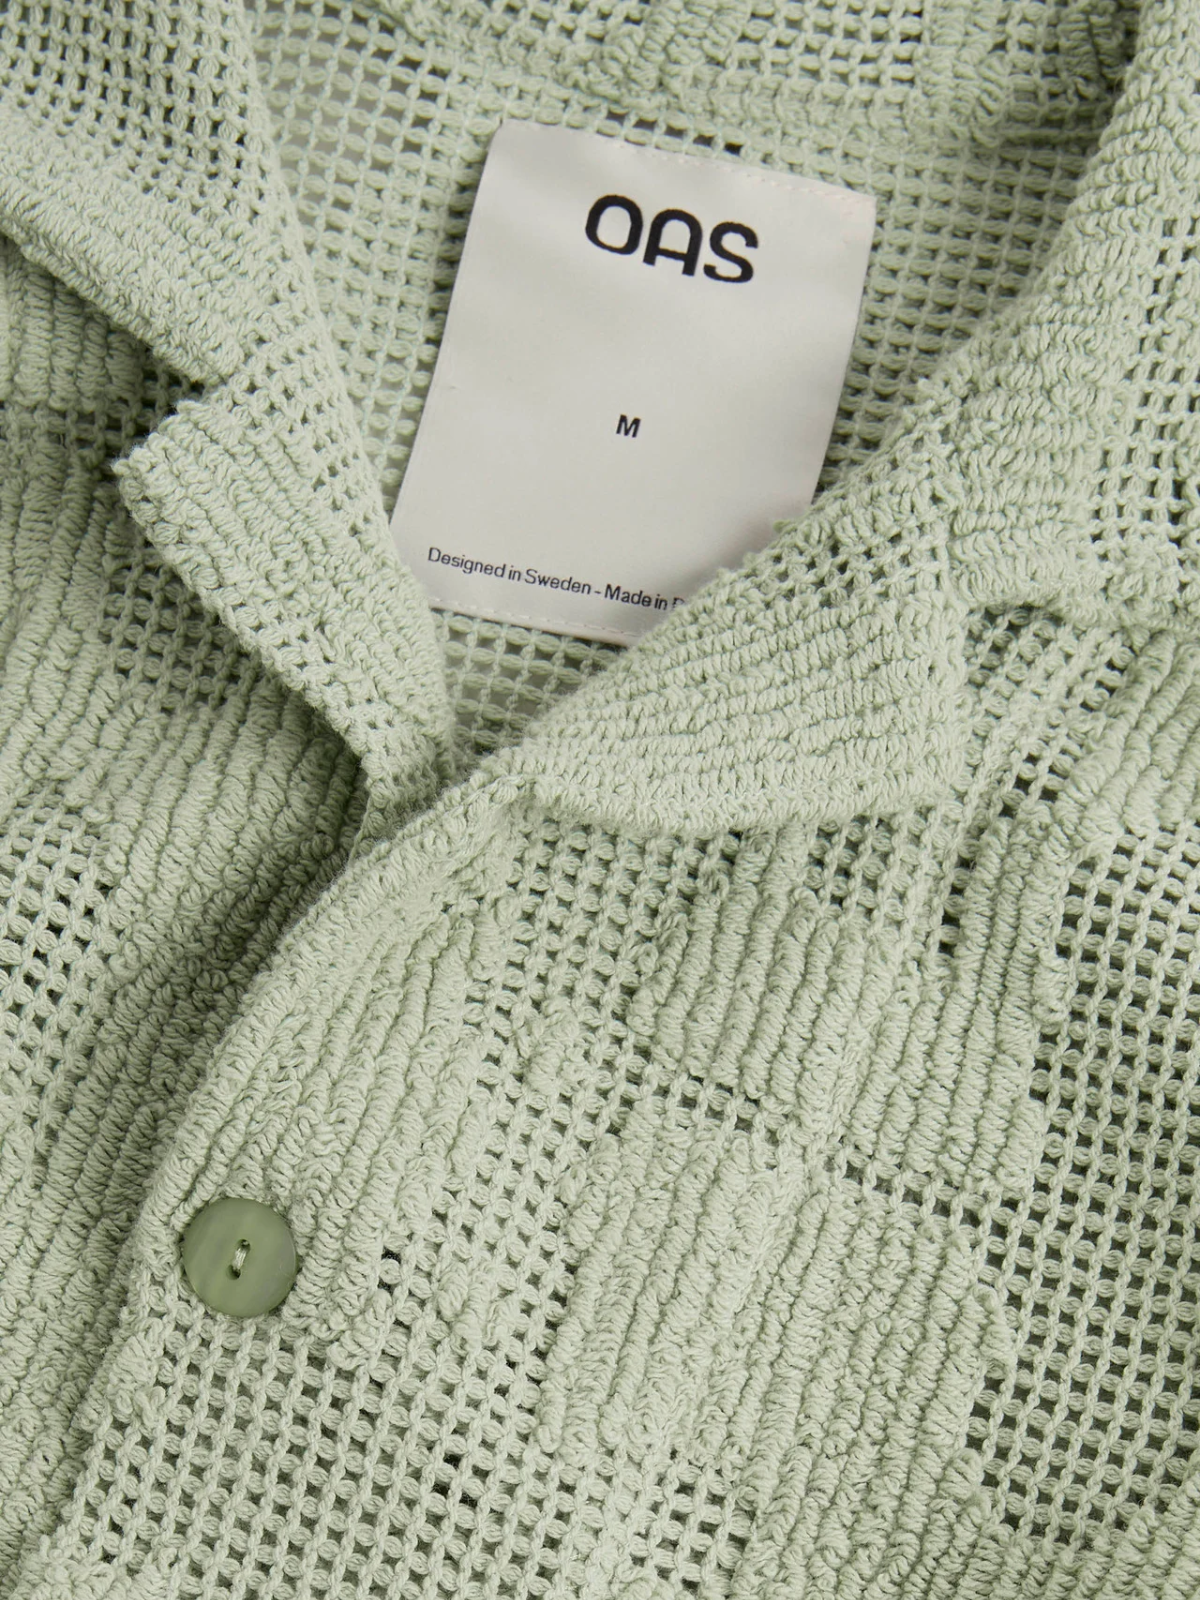 oas galbanum cuba chrochet shirt cotton polyester blend seafoam green ss short sleeve button up kempt athens ga georgia men's clothing store